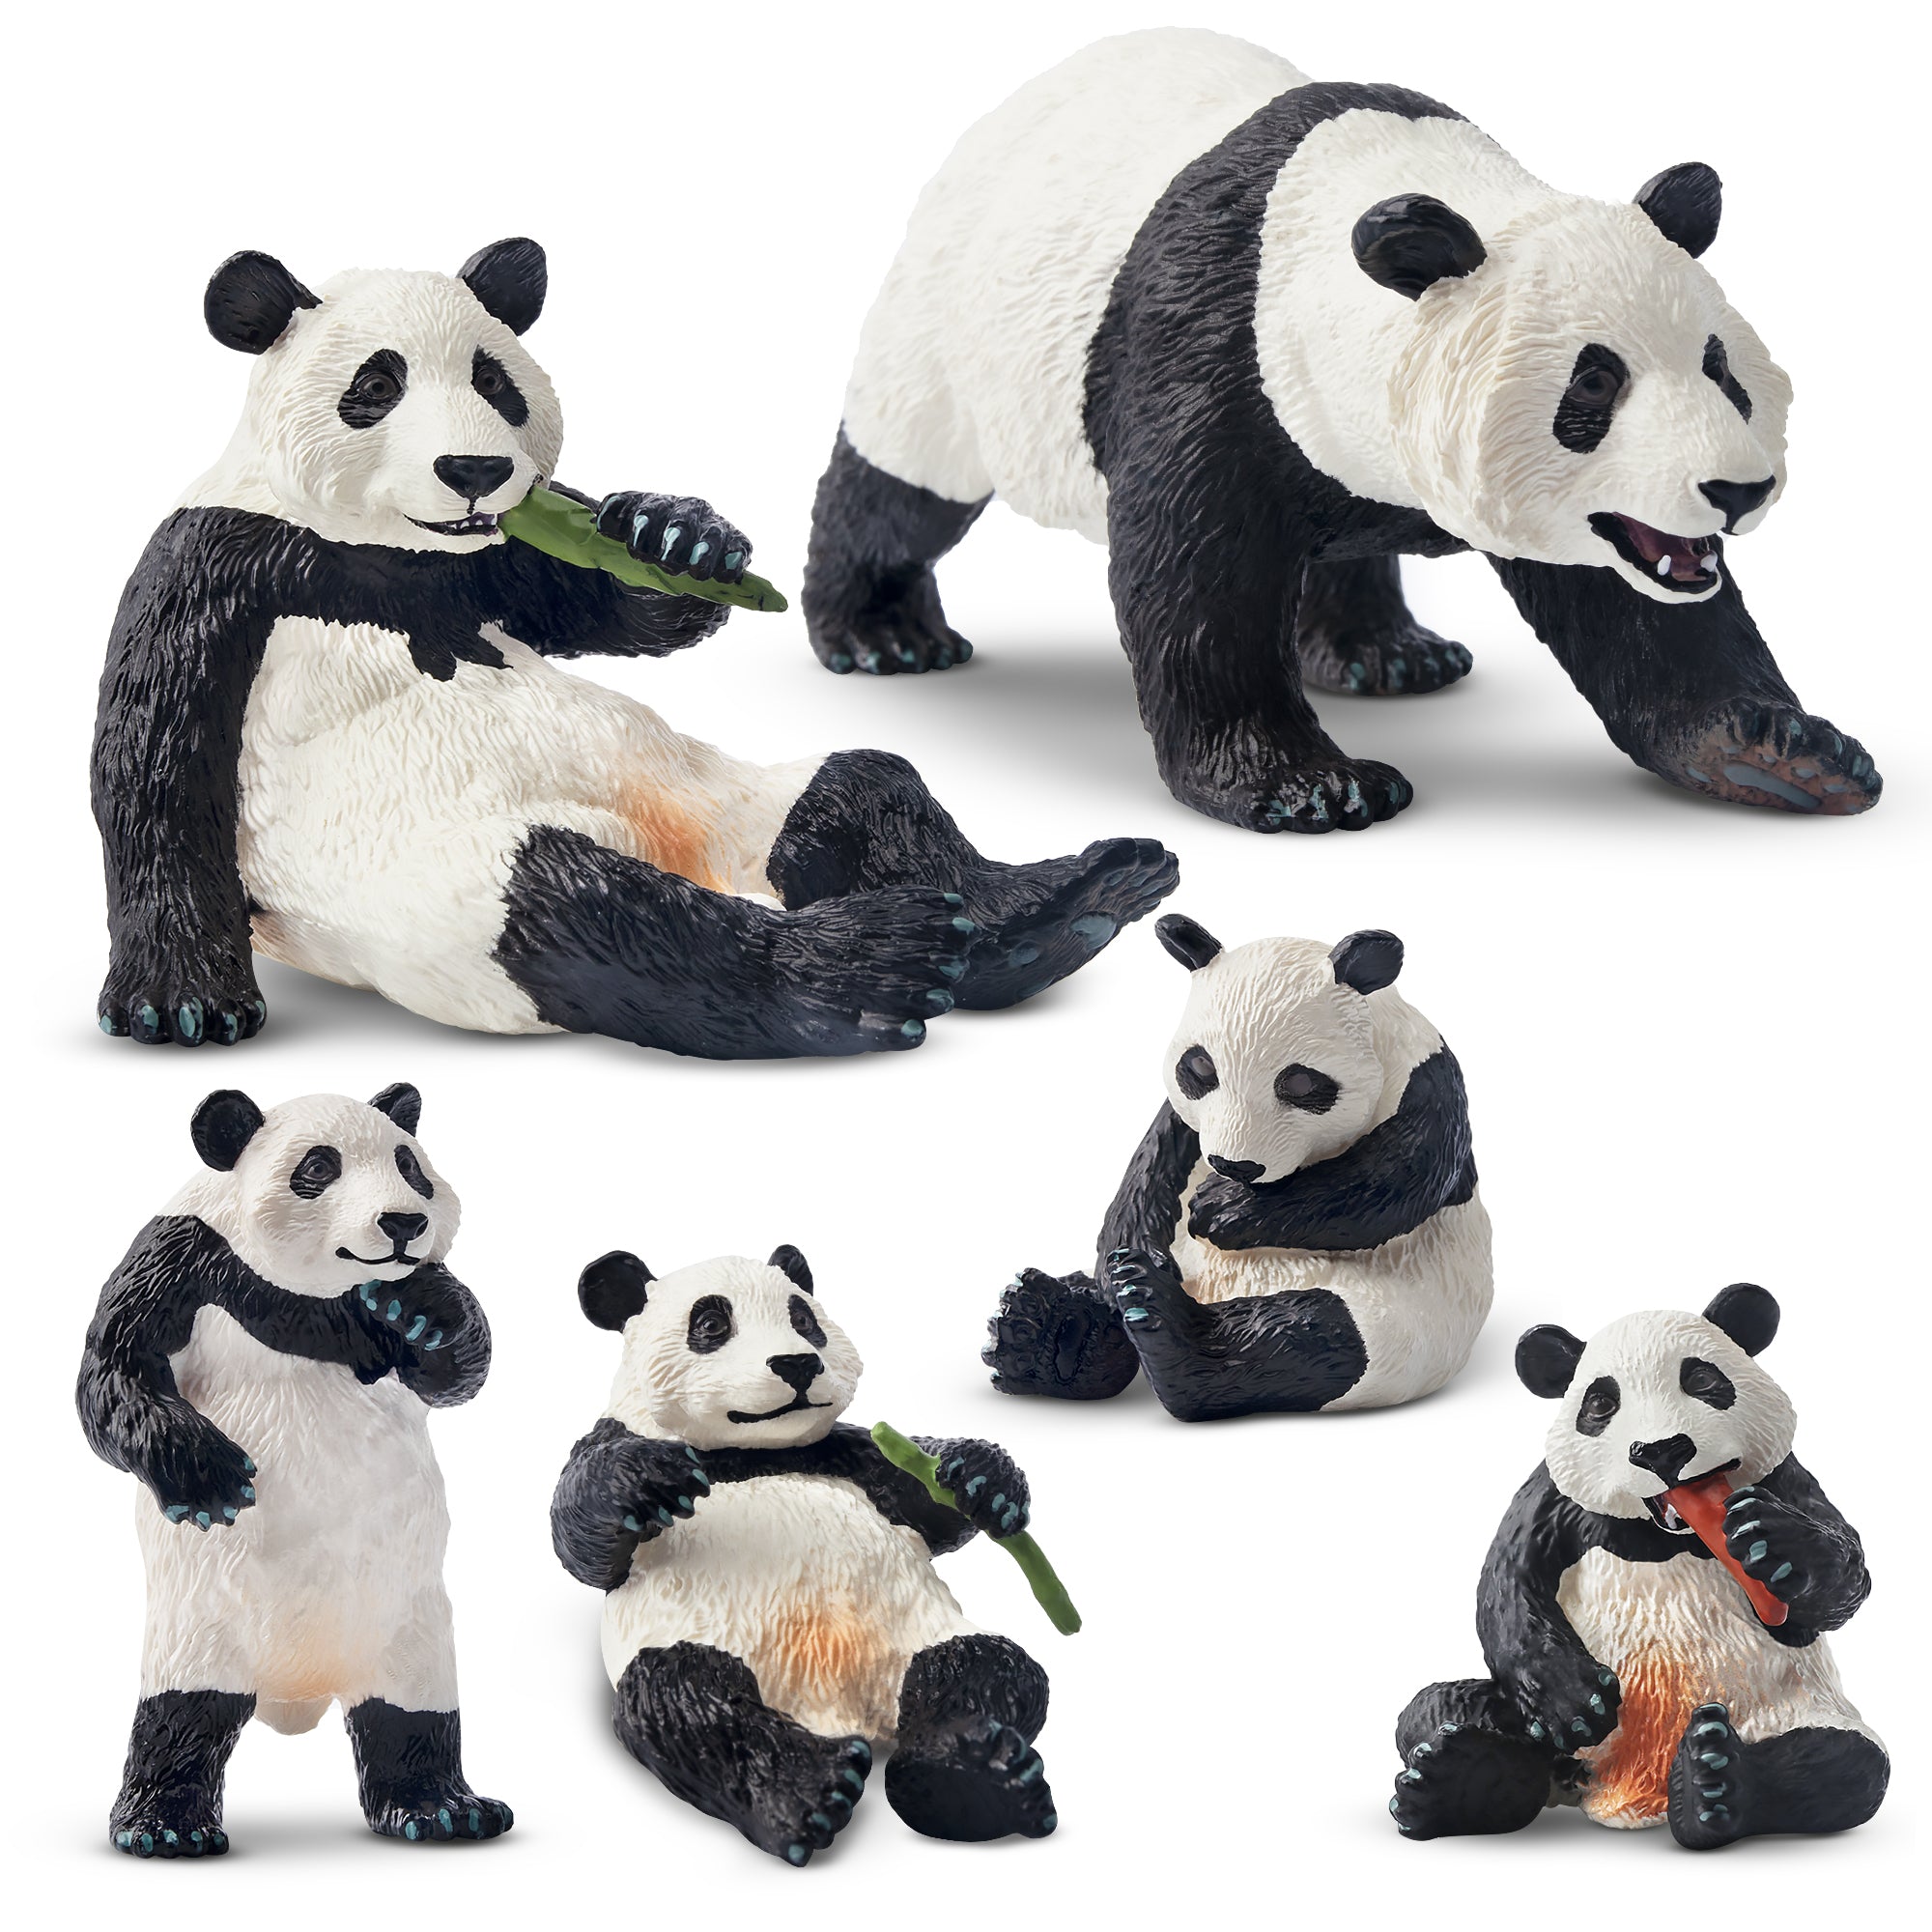 6-Piece Plastic Jungle Panda Animal Figurines Family Set-2